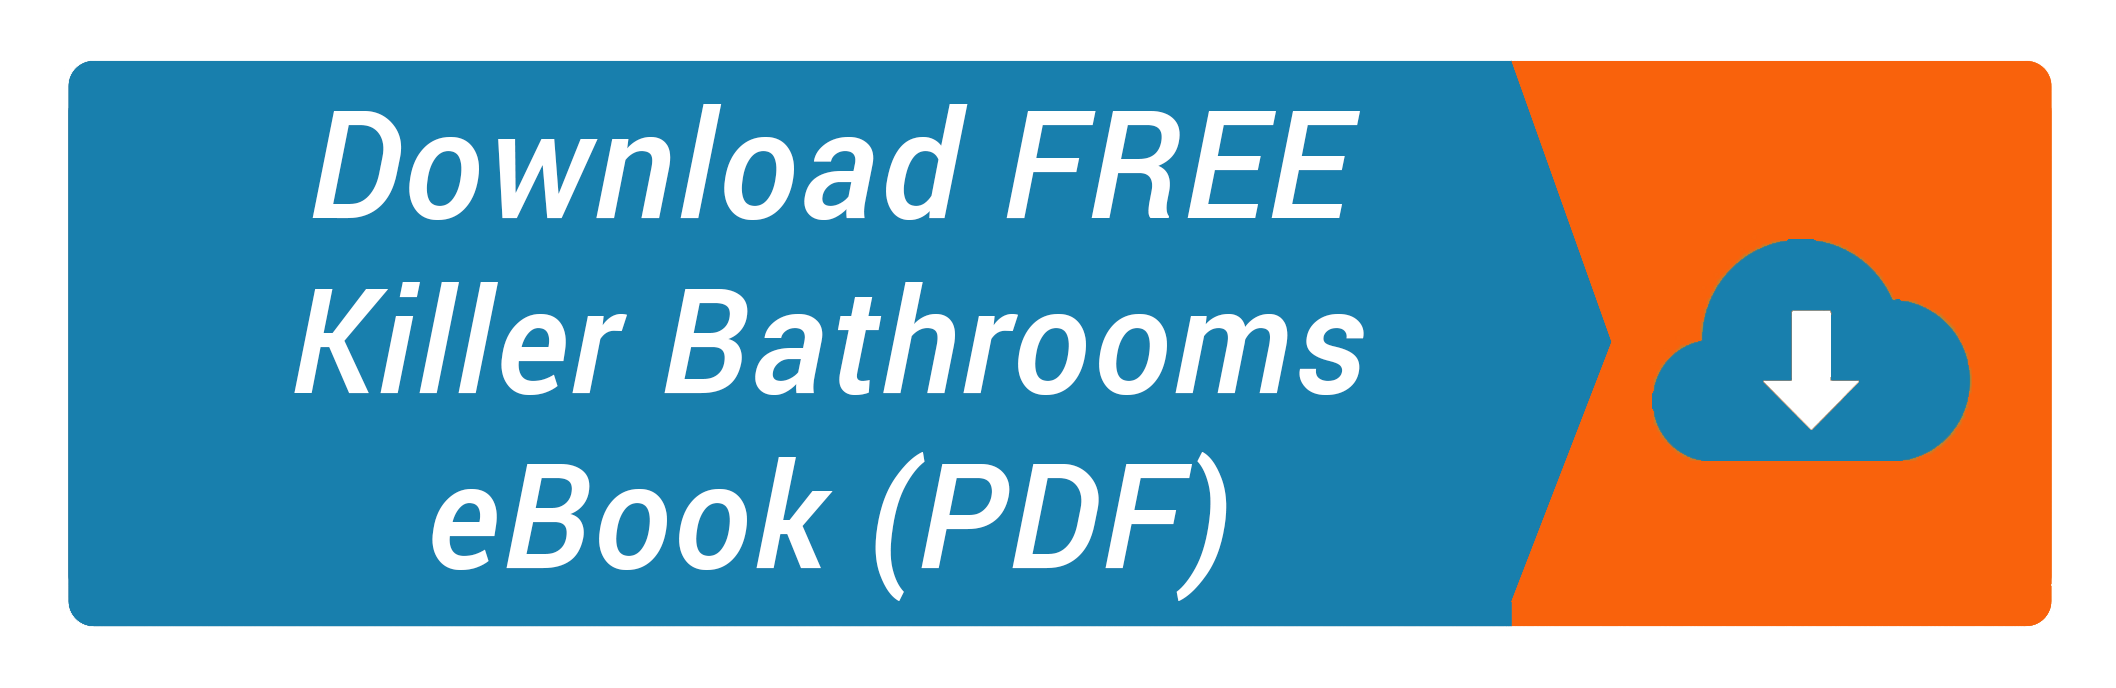 Download the 'Killer Bathrooms' ebook free. Author - George Bentley